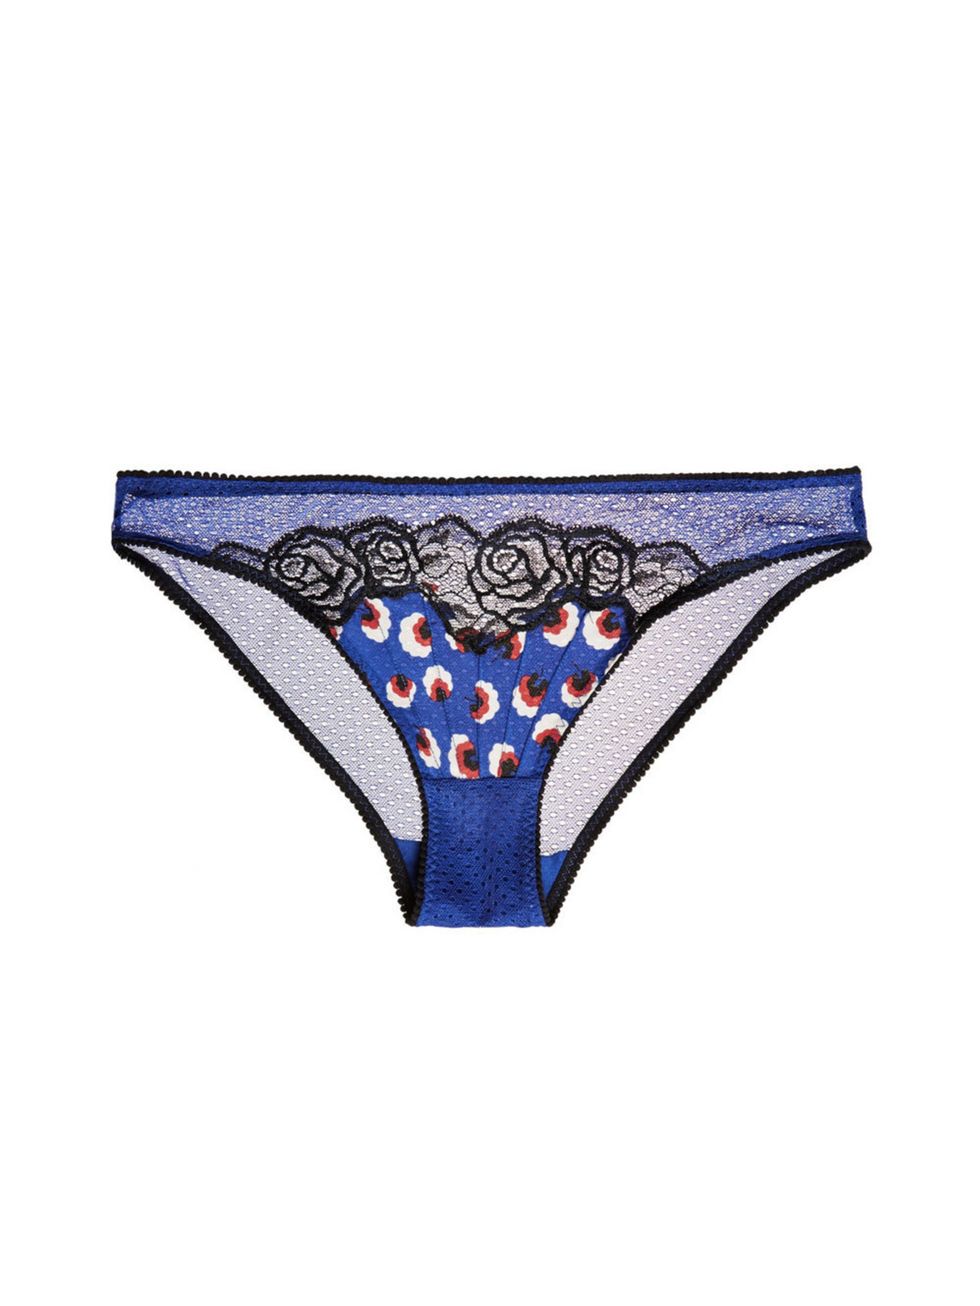 Pattern, Cobalt blue, Electric blue, Undergarment, Symmetry, Symbol, Briefs, Swim brief, 